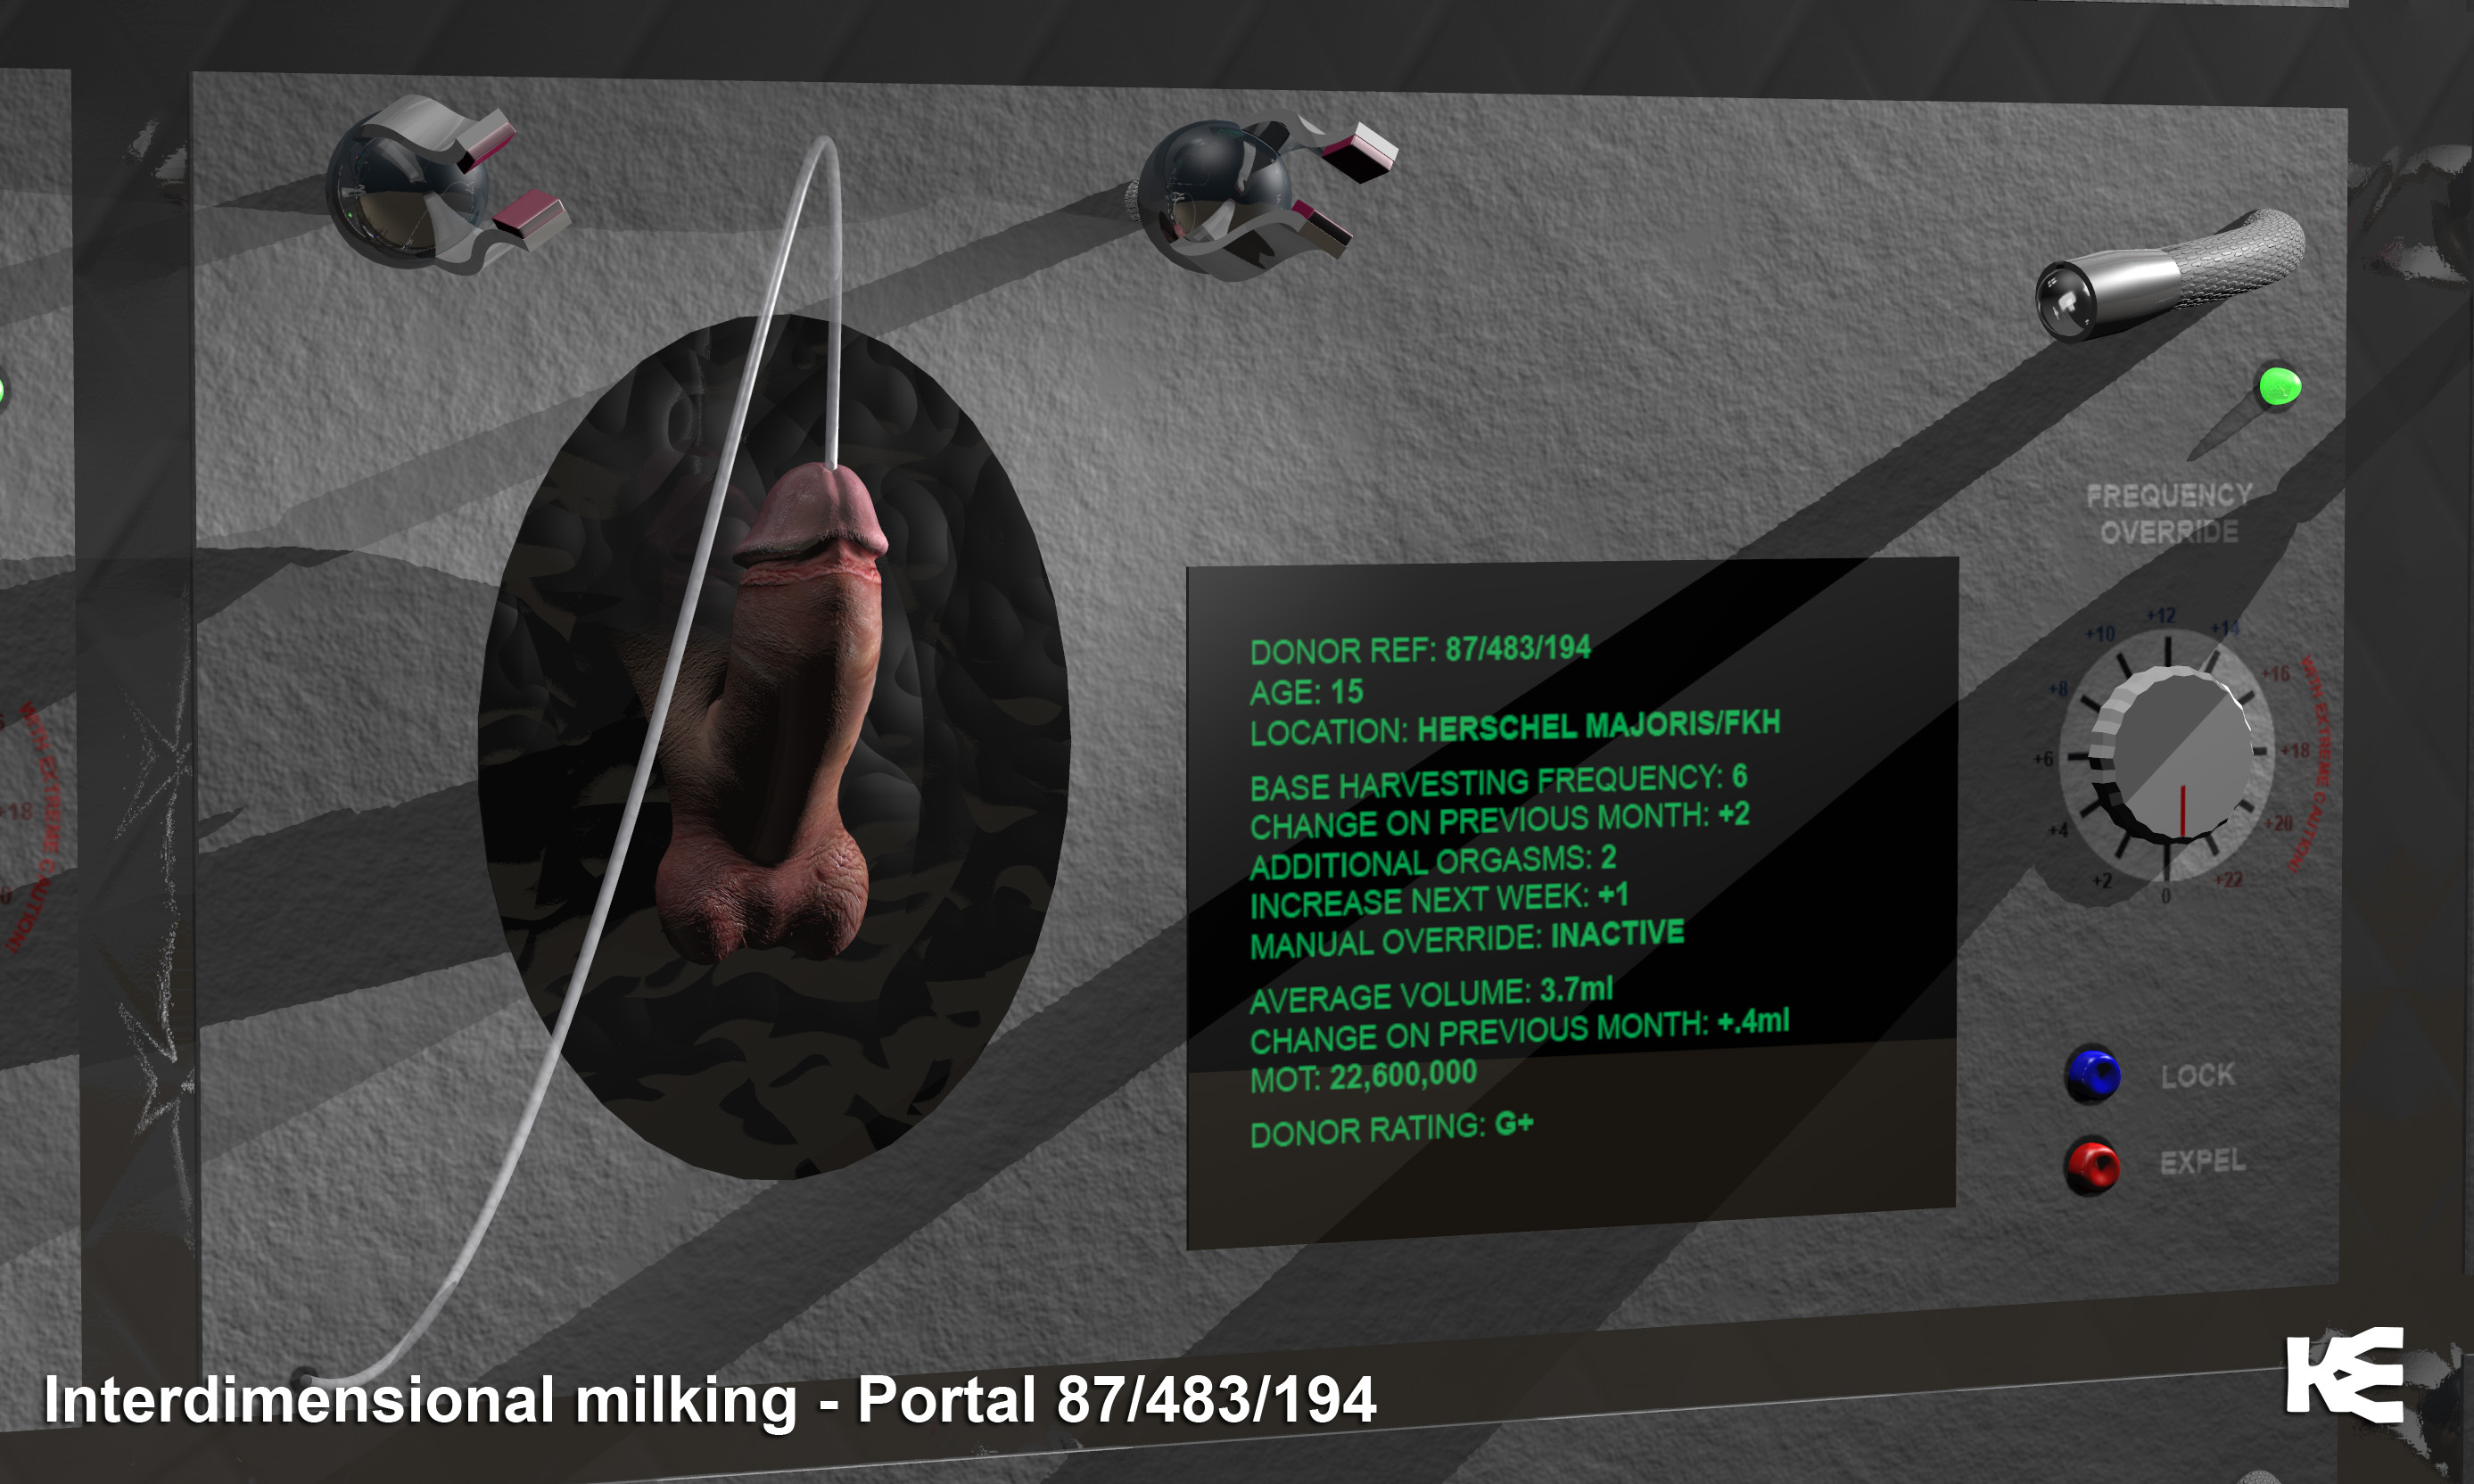 Interdimensional milking